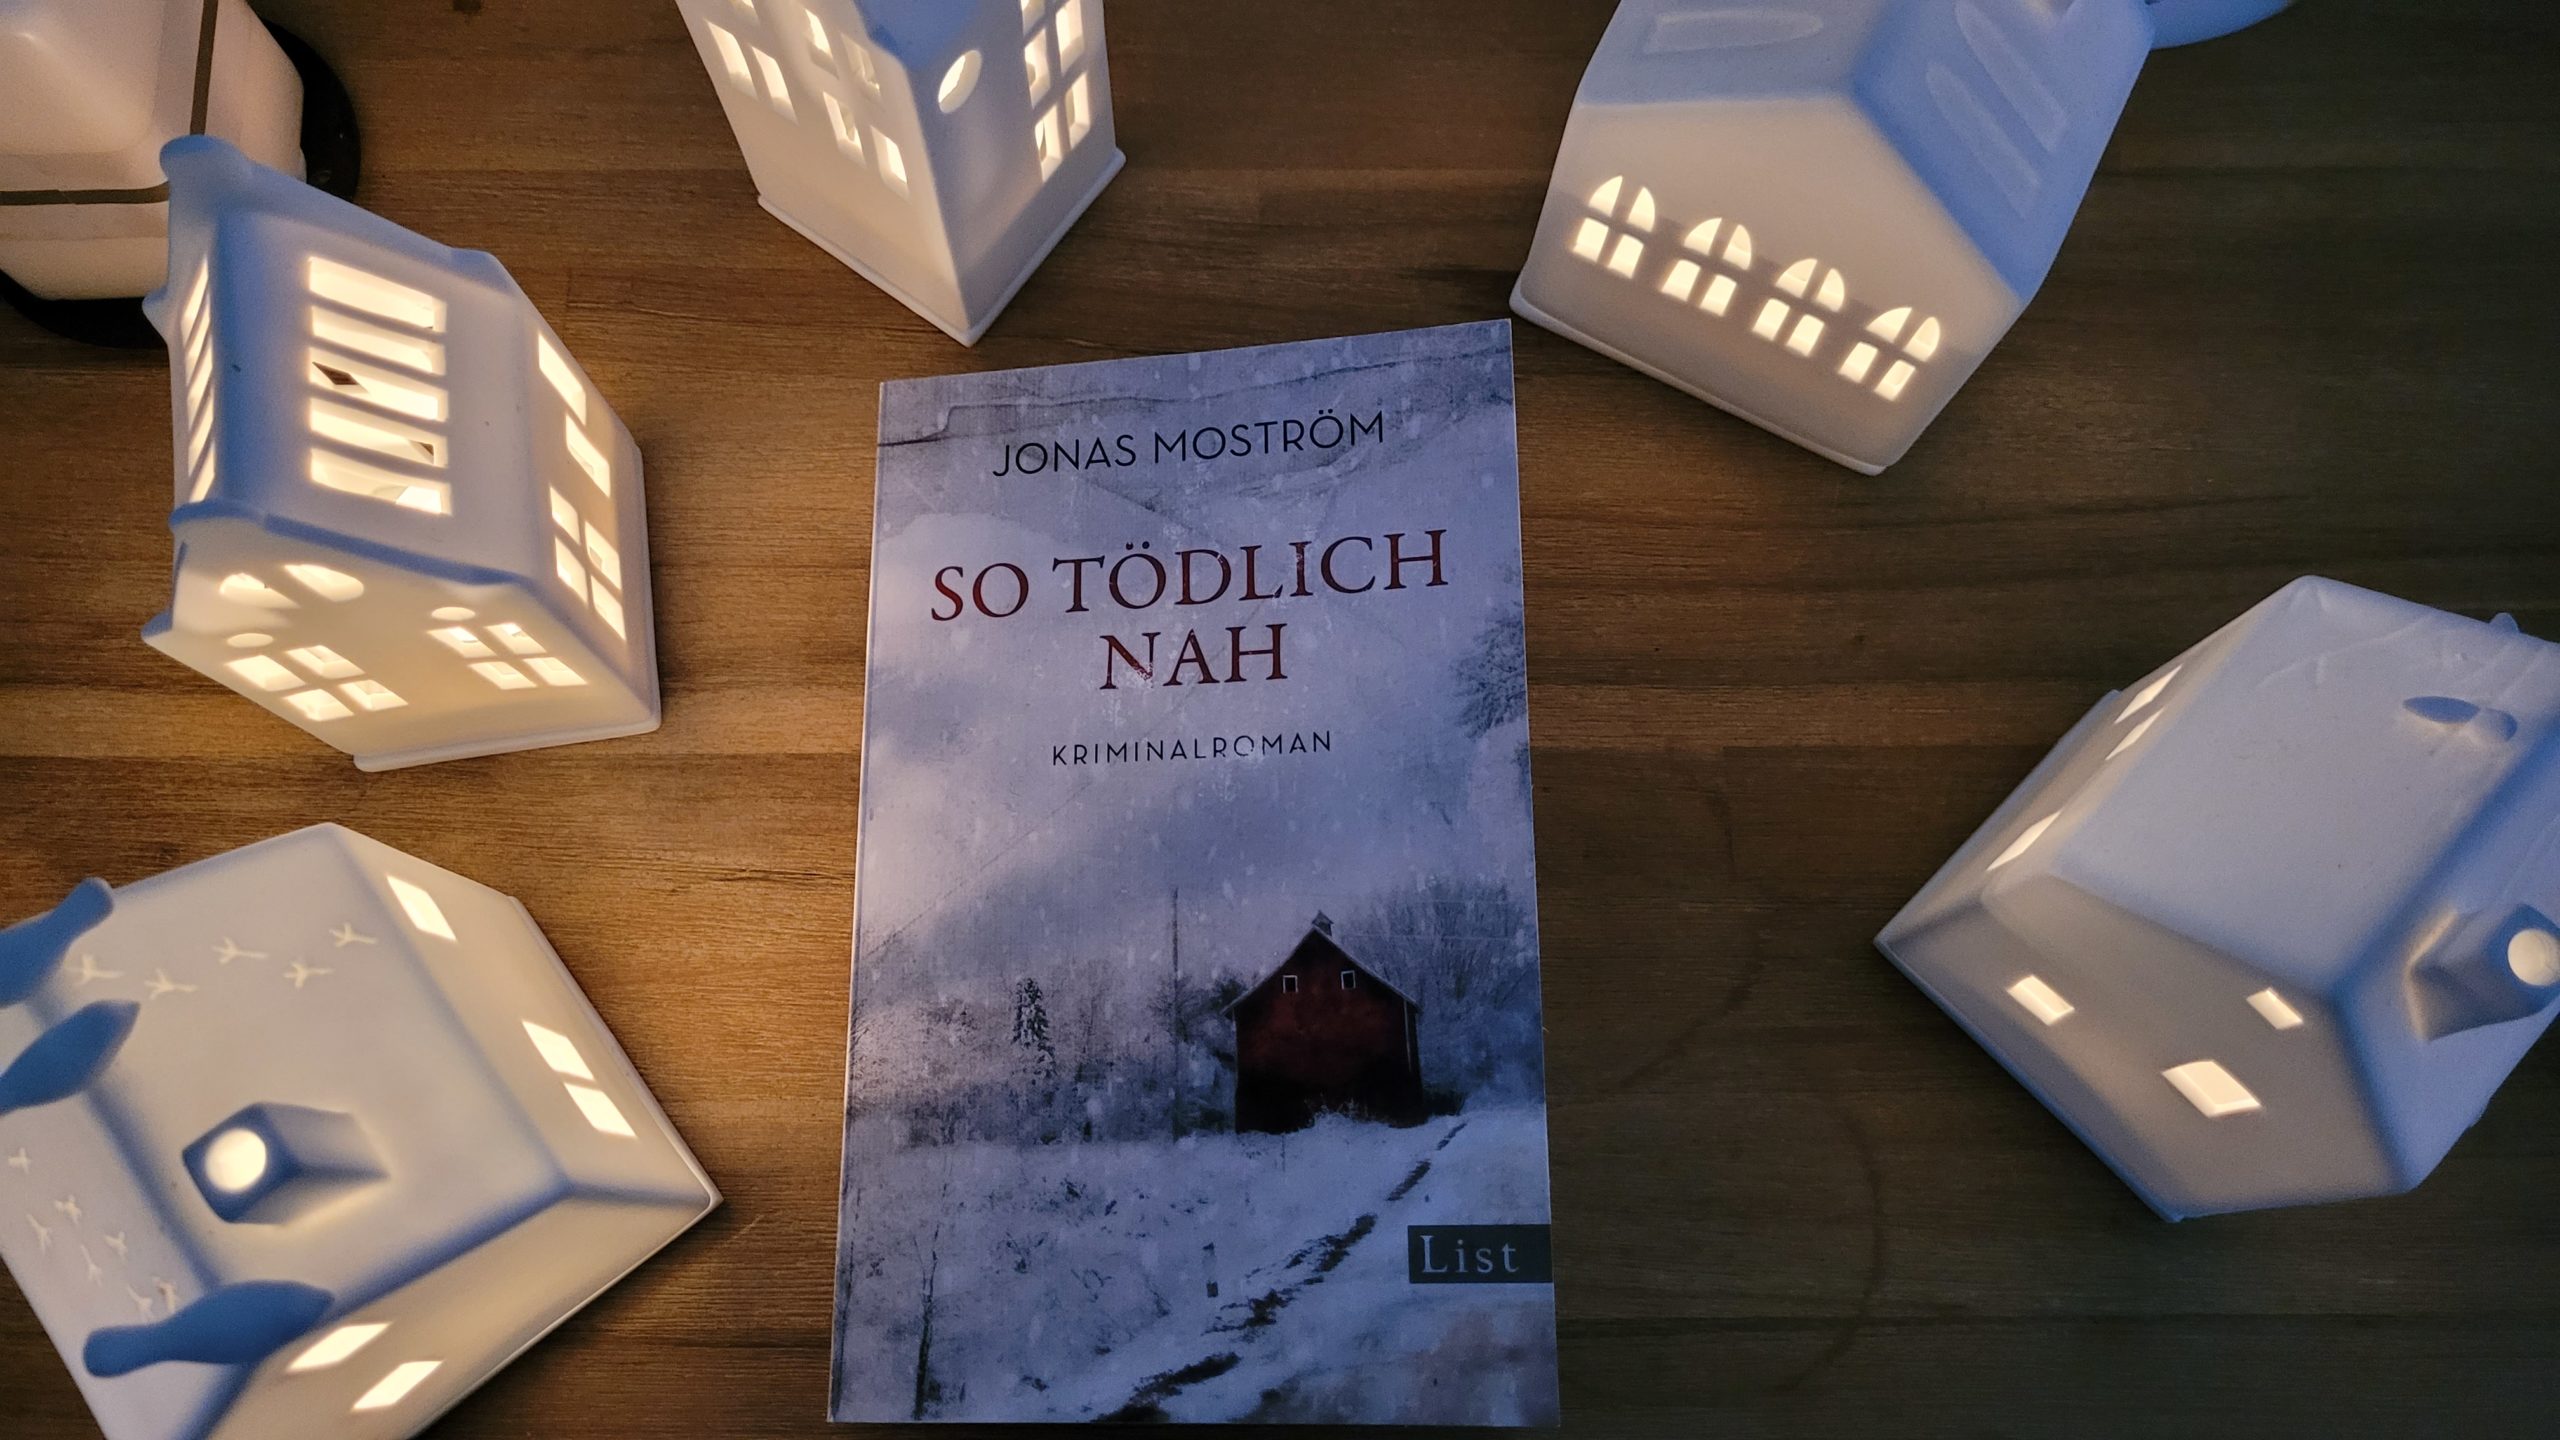 Buch-Cover: So tödlich nah, Jonas Moström, List-Verlag